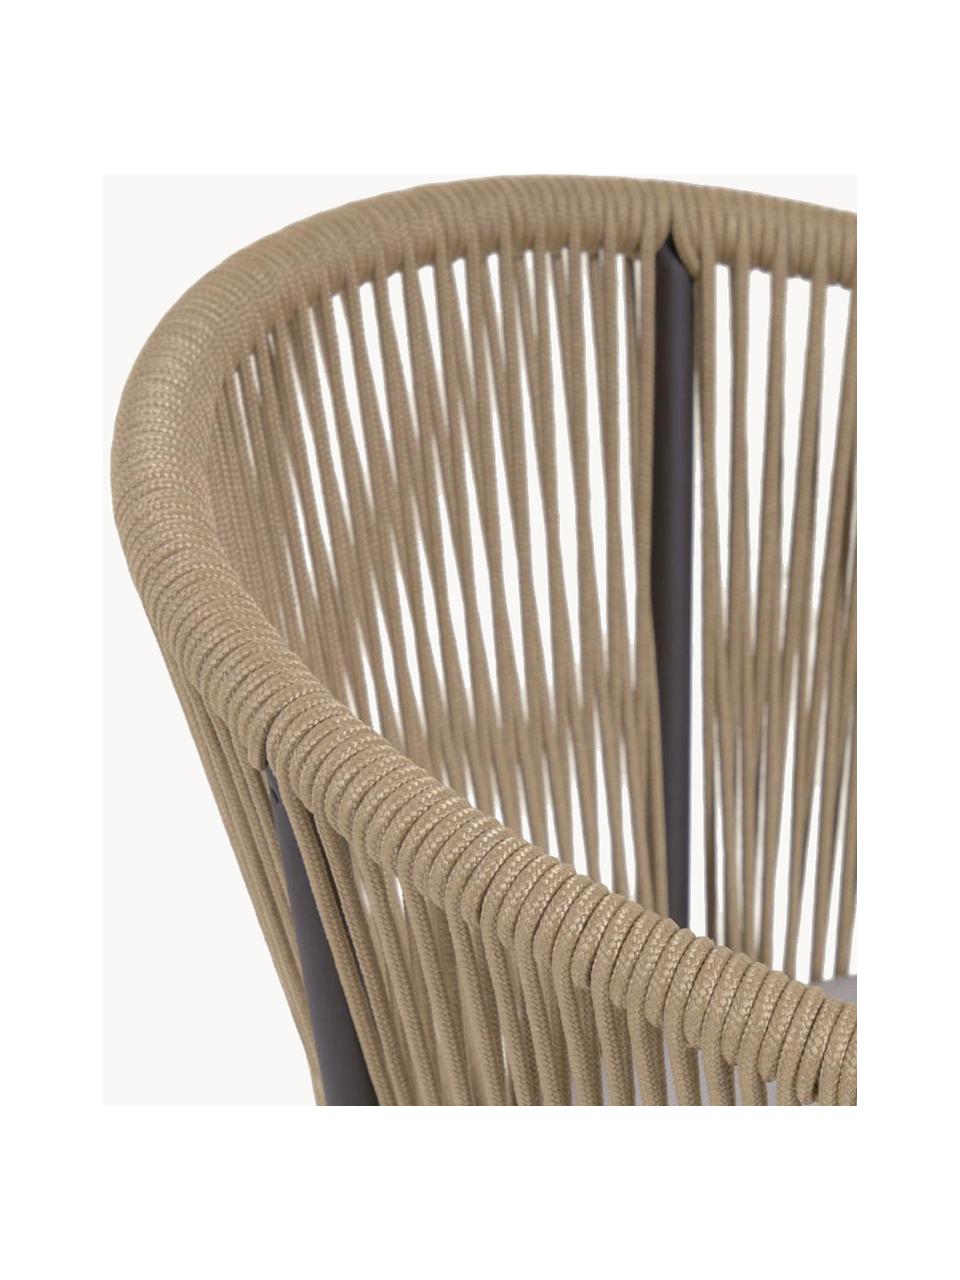 Chaise de jardin Yanet, Brun clair, tissu taupe, larg. 56 x prof. 55 cm